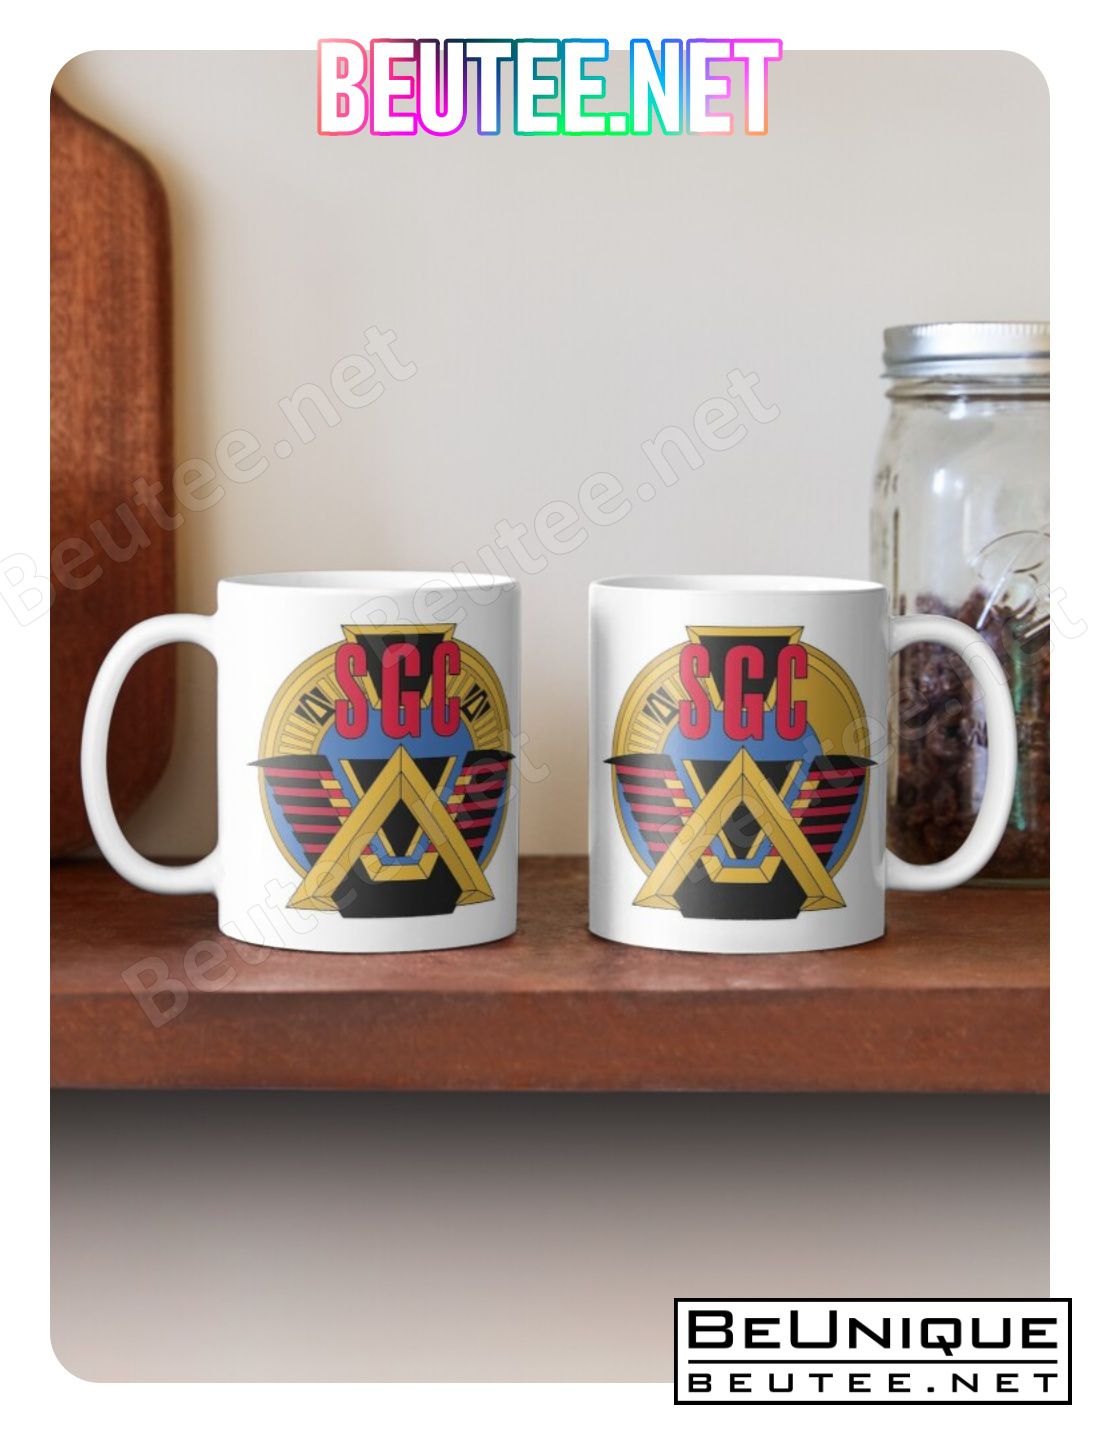 Sgc Mug - Double Sided Coffee Mug